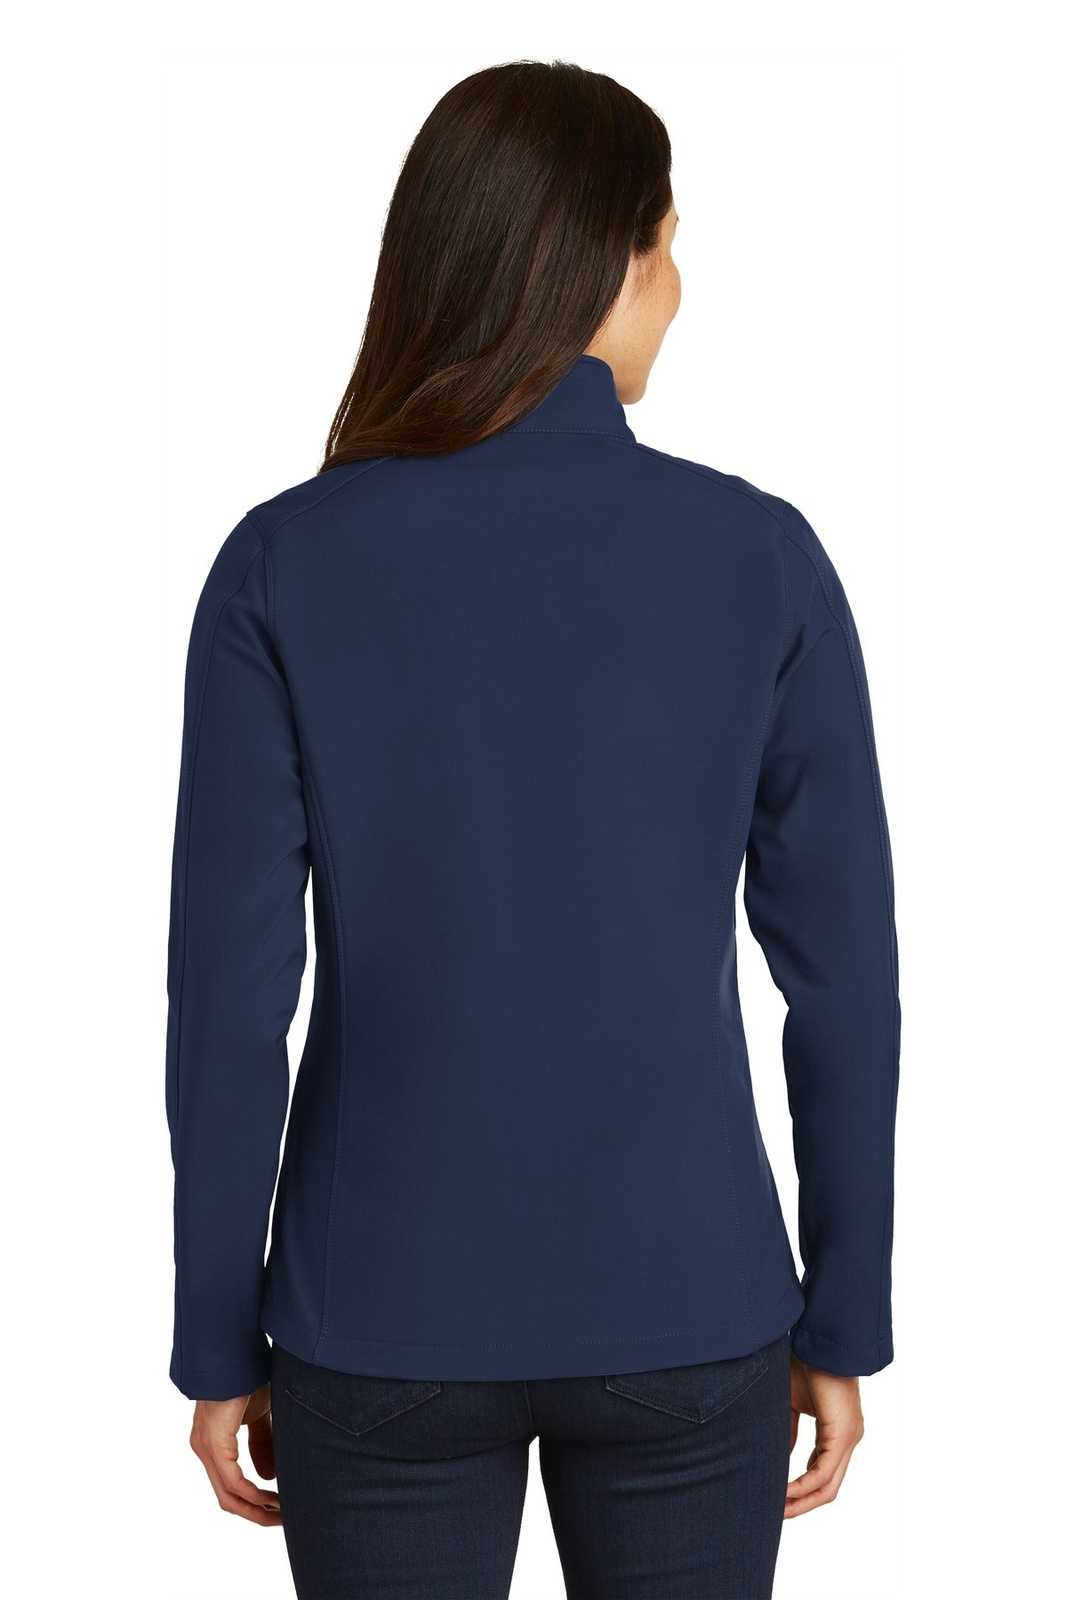 Port Authority L317 Ladies Core Soft Shell Jacket - Dress Blue Navy - HIT a Double - 1